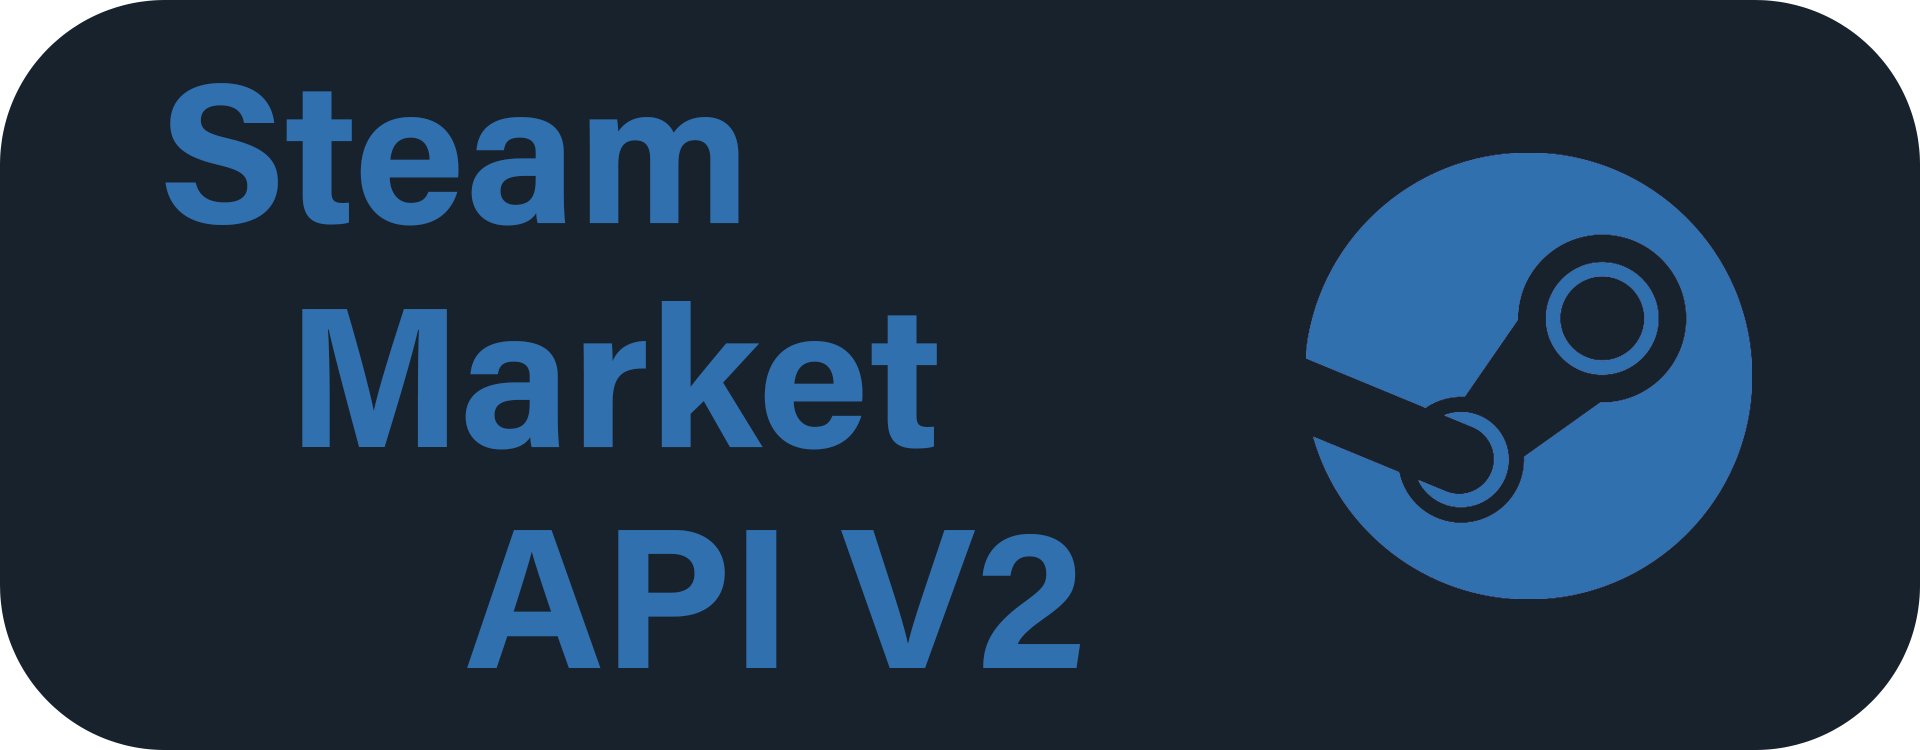 Steam-market-api-v2